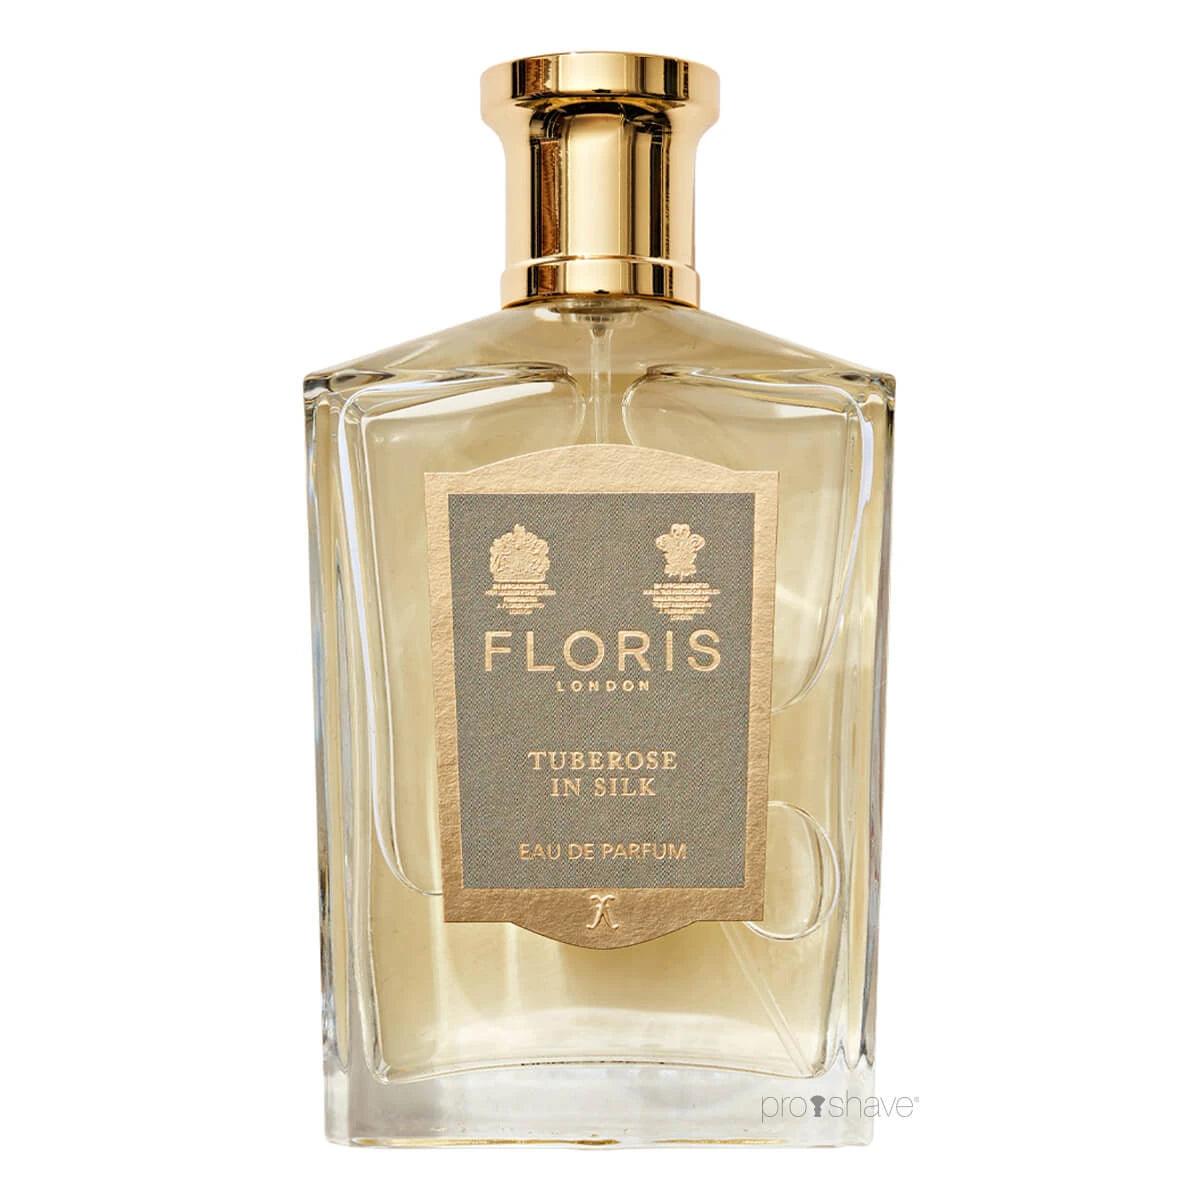 Floris Tuberose In Silk, Eau de Parfum, 100 ml | Parfyme | Floris London | JK SHOP | JK Barber og herre frisør | Lavepriser | Best